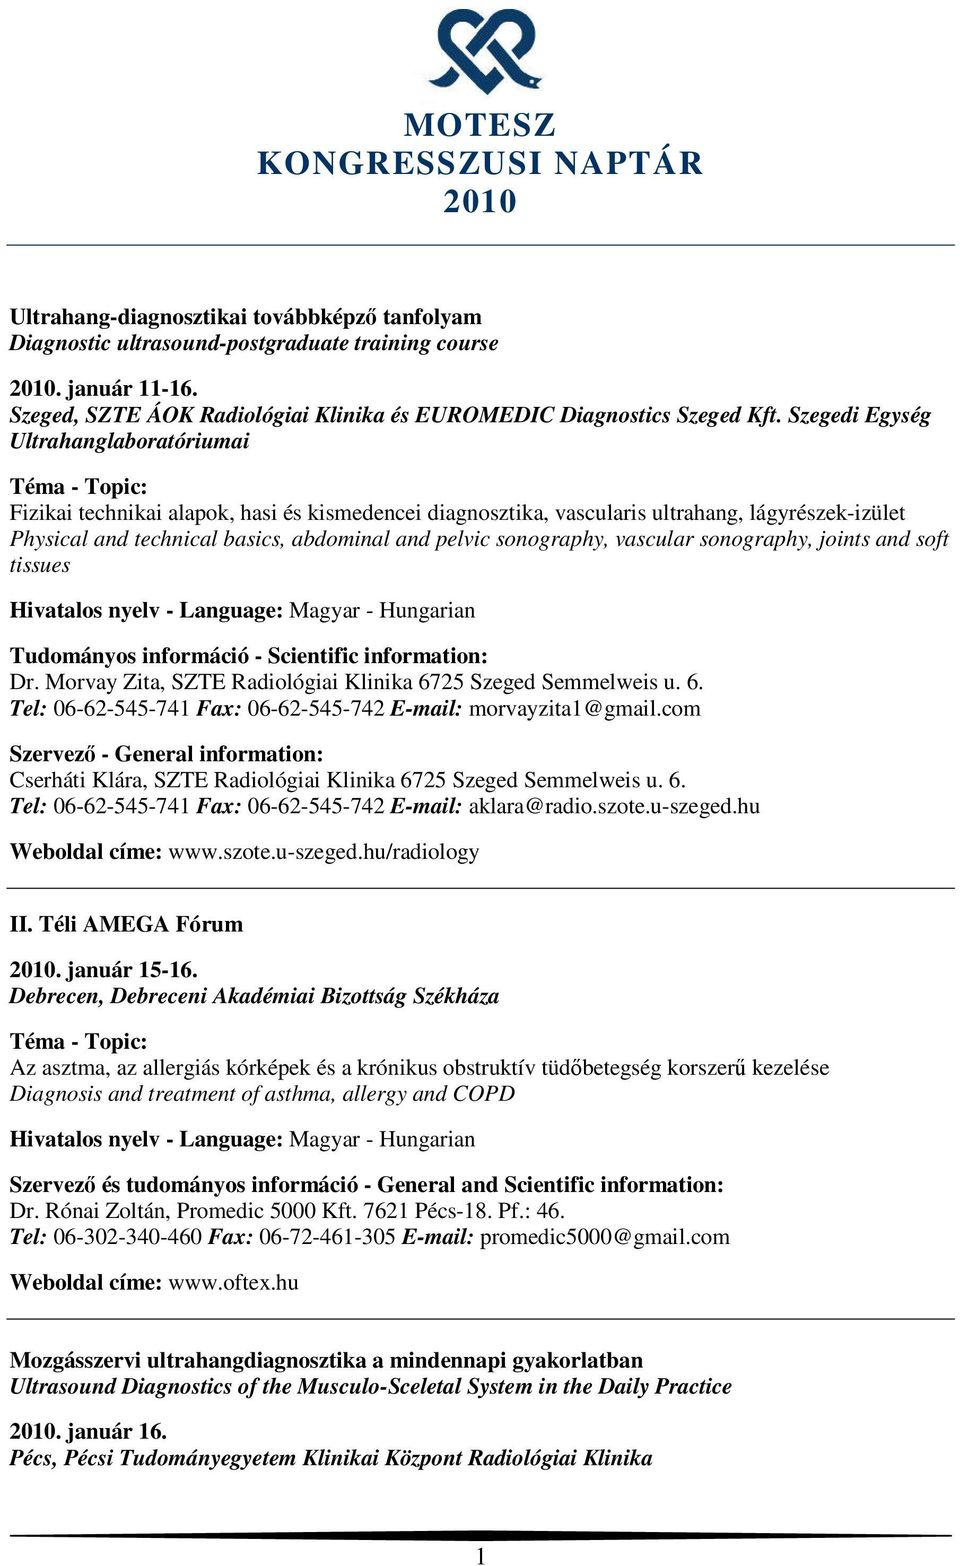 sonography, vascular sonography, joints and soft tissues Dr. Morvay Zita, SZTE Radiológiai Klinika 6725 Szeged Semmelweis u. 6. Tel: 06-62-545-741 Fax: 06-62-545-742 E-mail: morvayzita1@gmail.